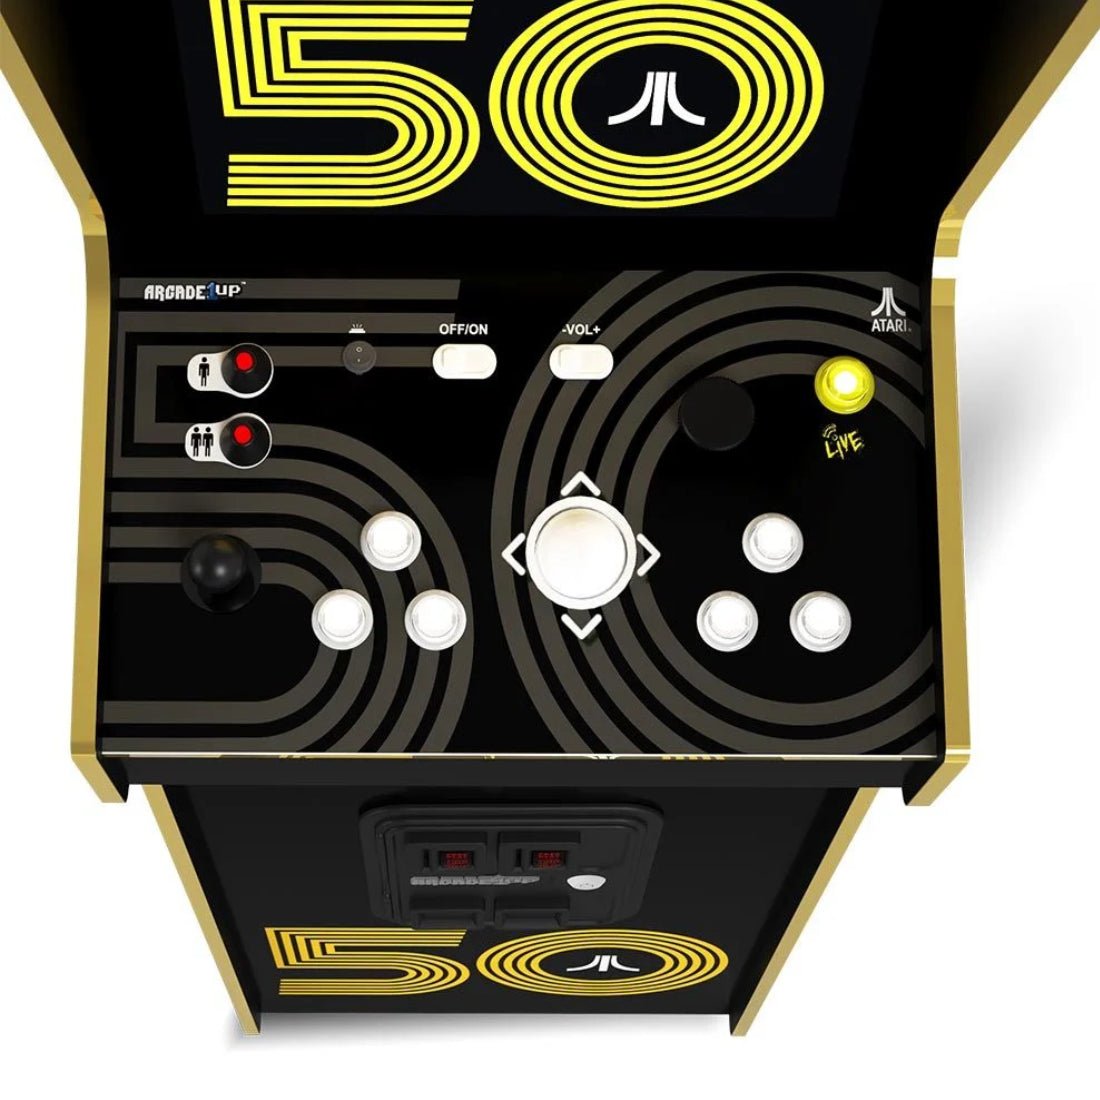 Arcade1Up Atari 50th Annivesary Deluxe Arcade Machine - 50 Games in 1 - ماكينة ألعاب - Store 974 | ستور ٩٧٤